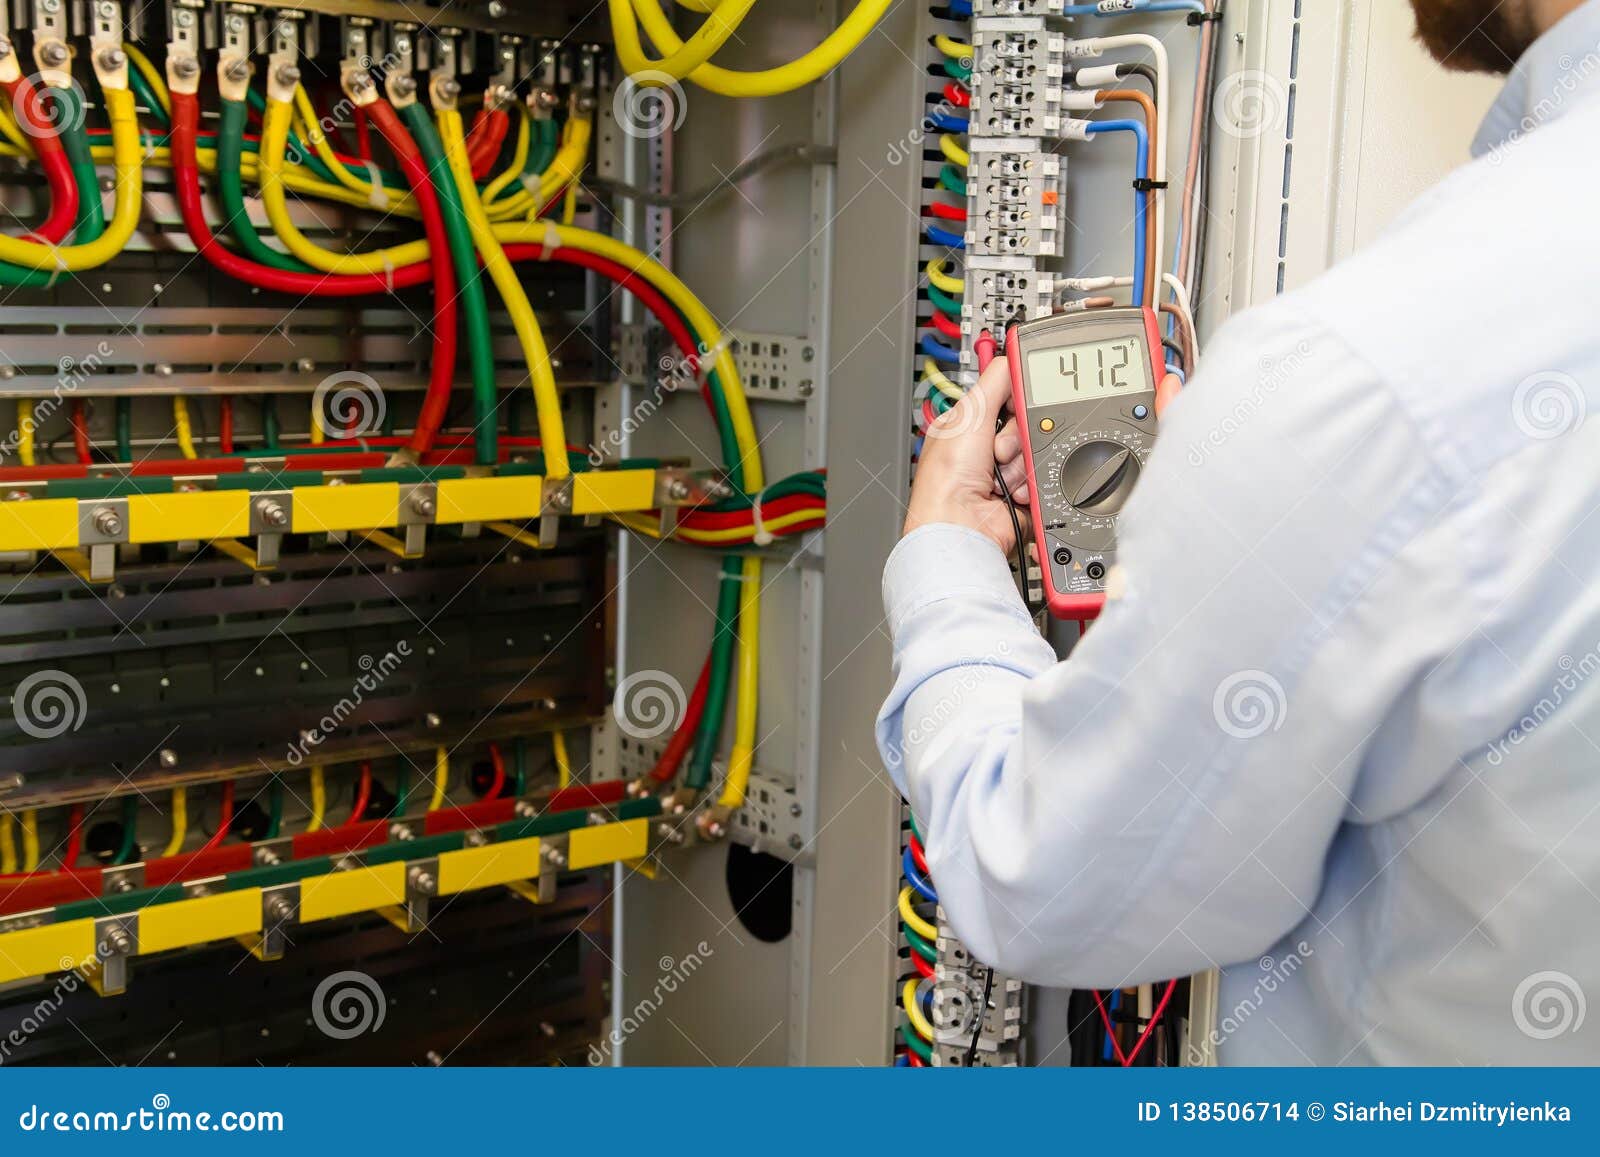 Electrical service engineer jobs west midlands